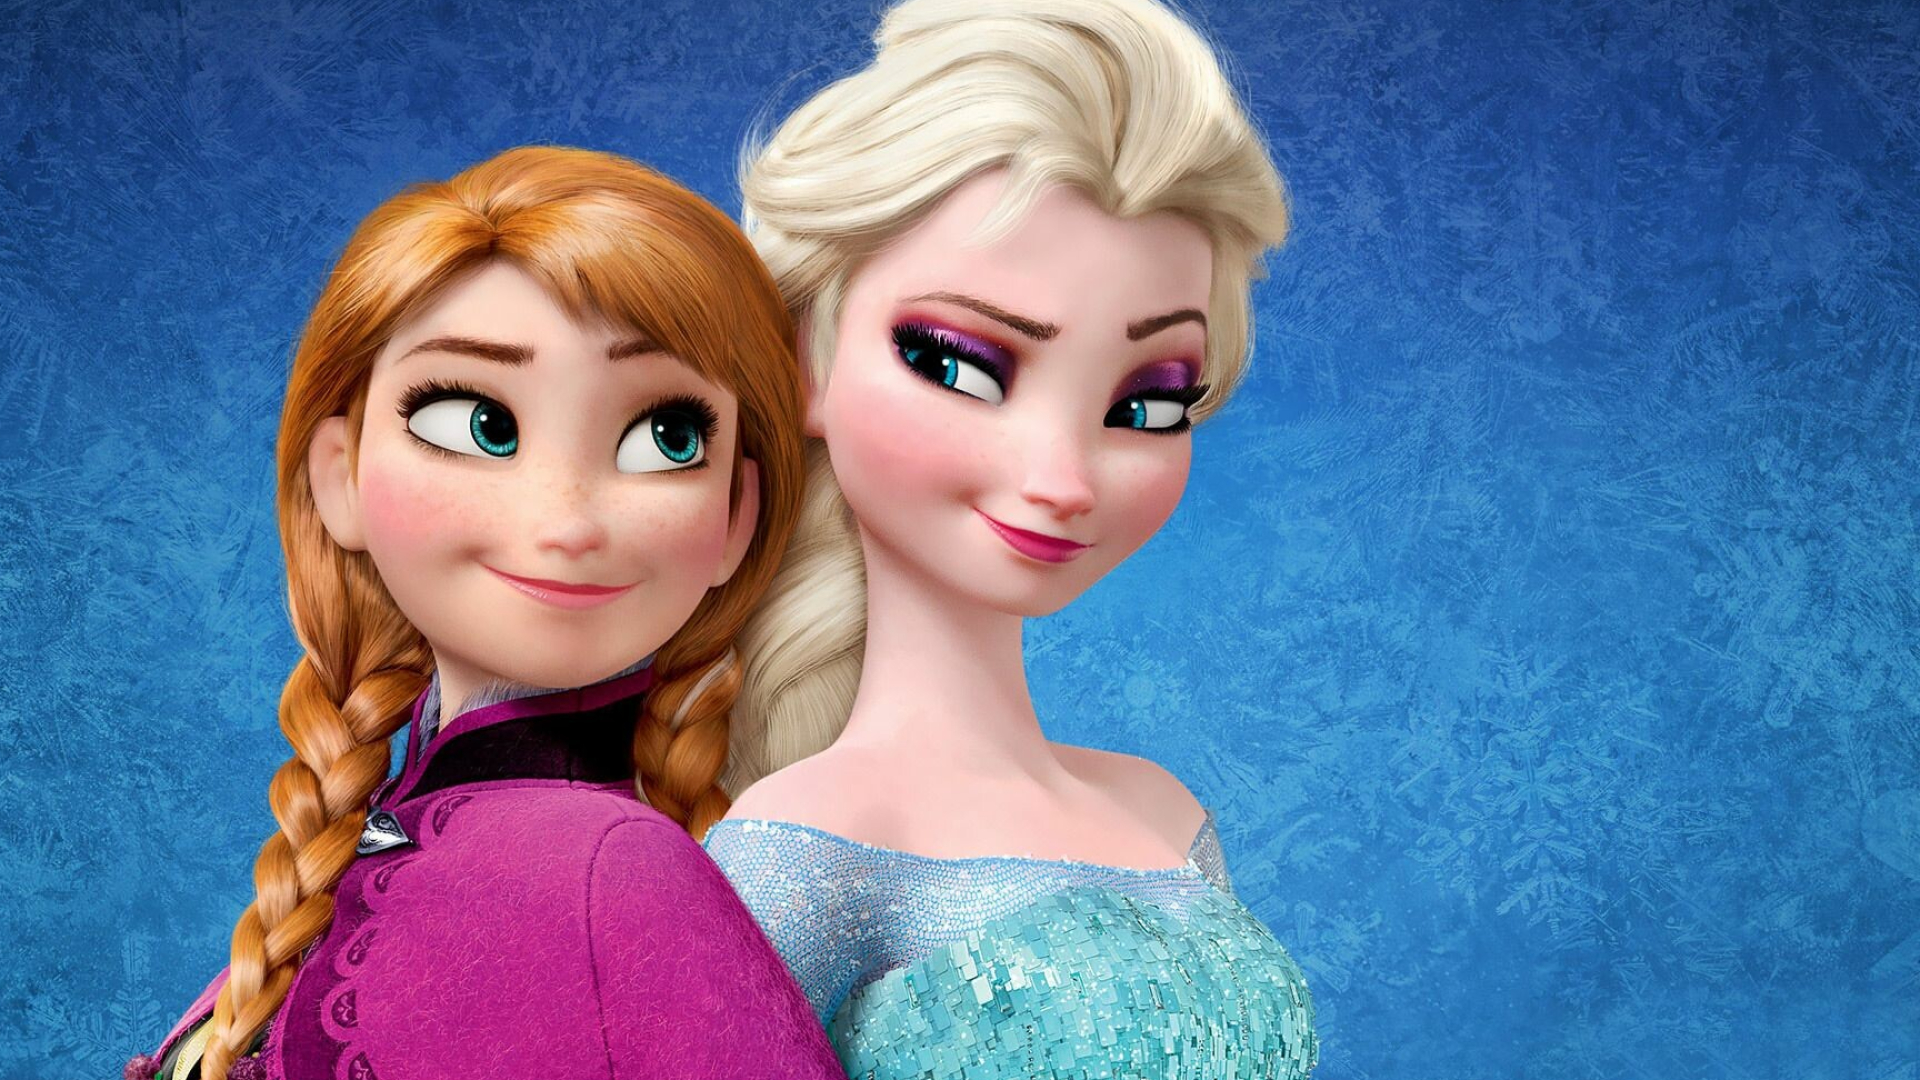 Frozen: Disney movie, Princesses of Arendelle. 1920x1080 Full HD Wallpaper.